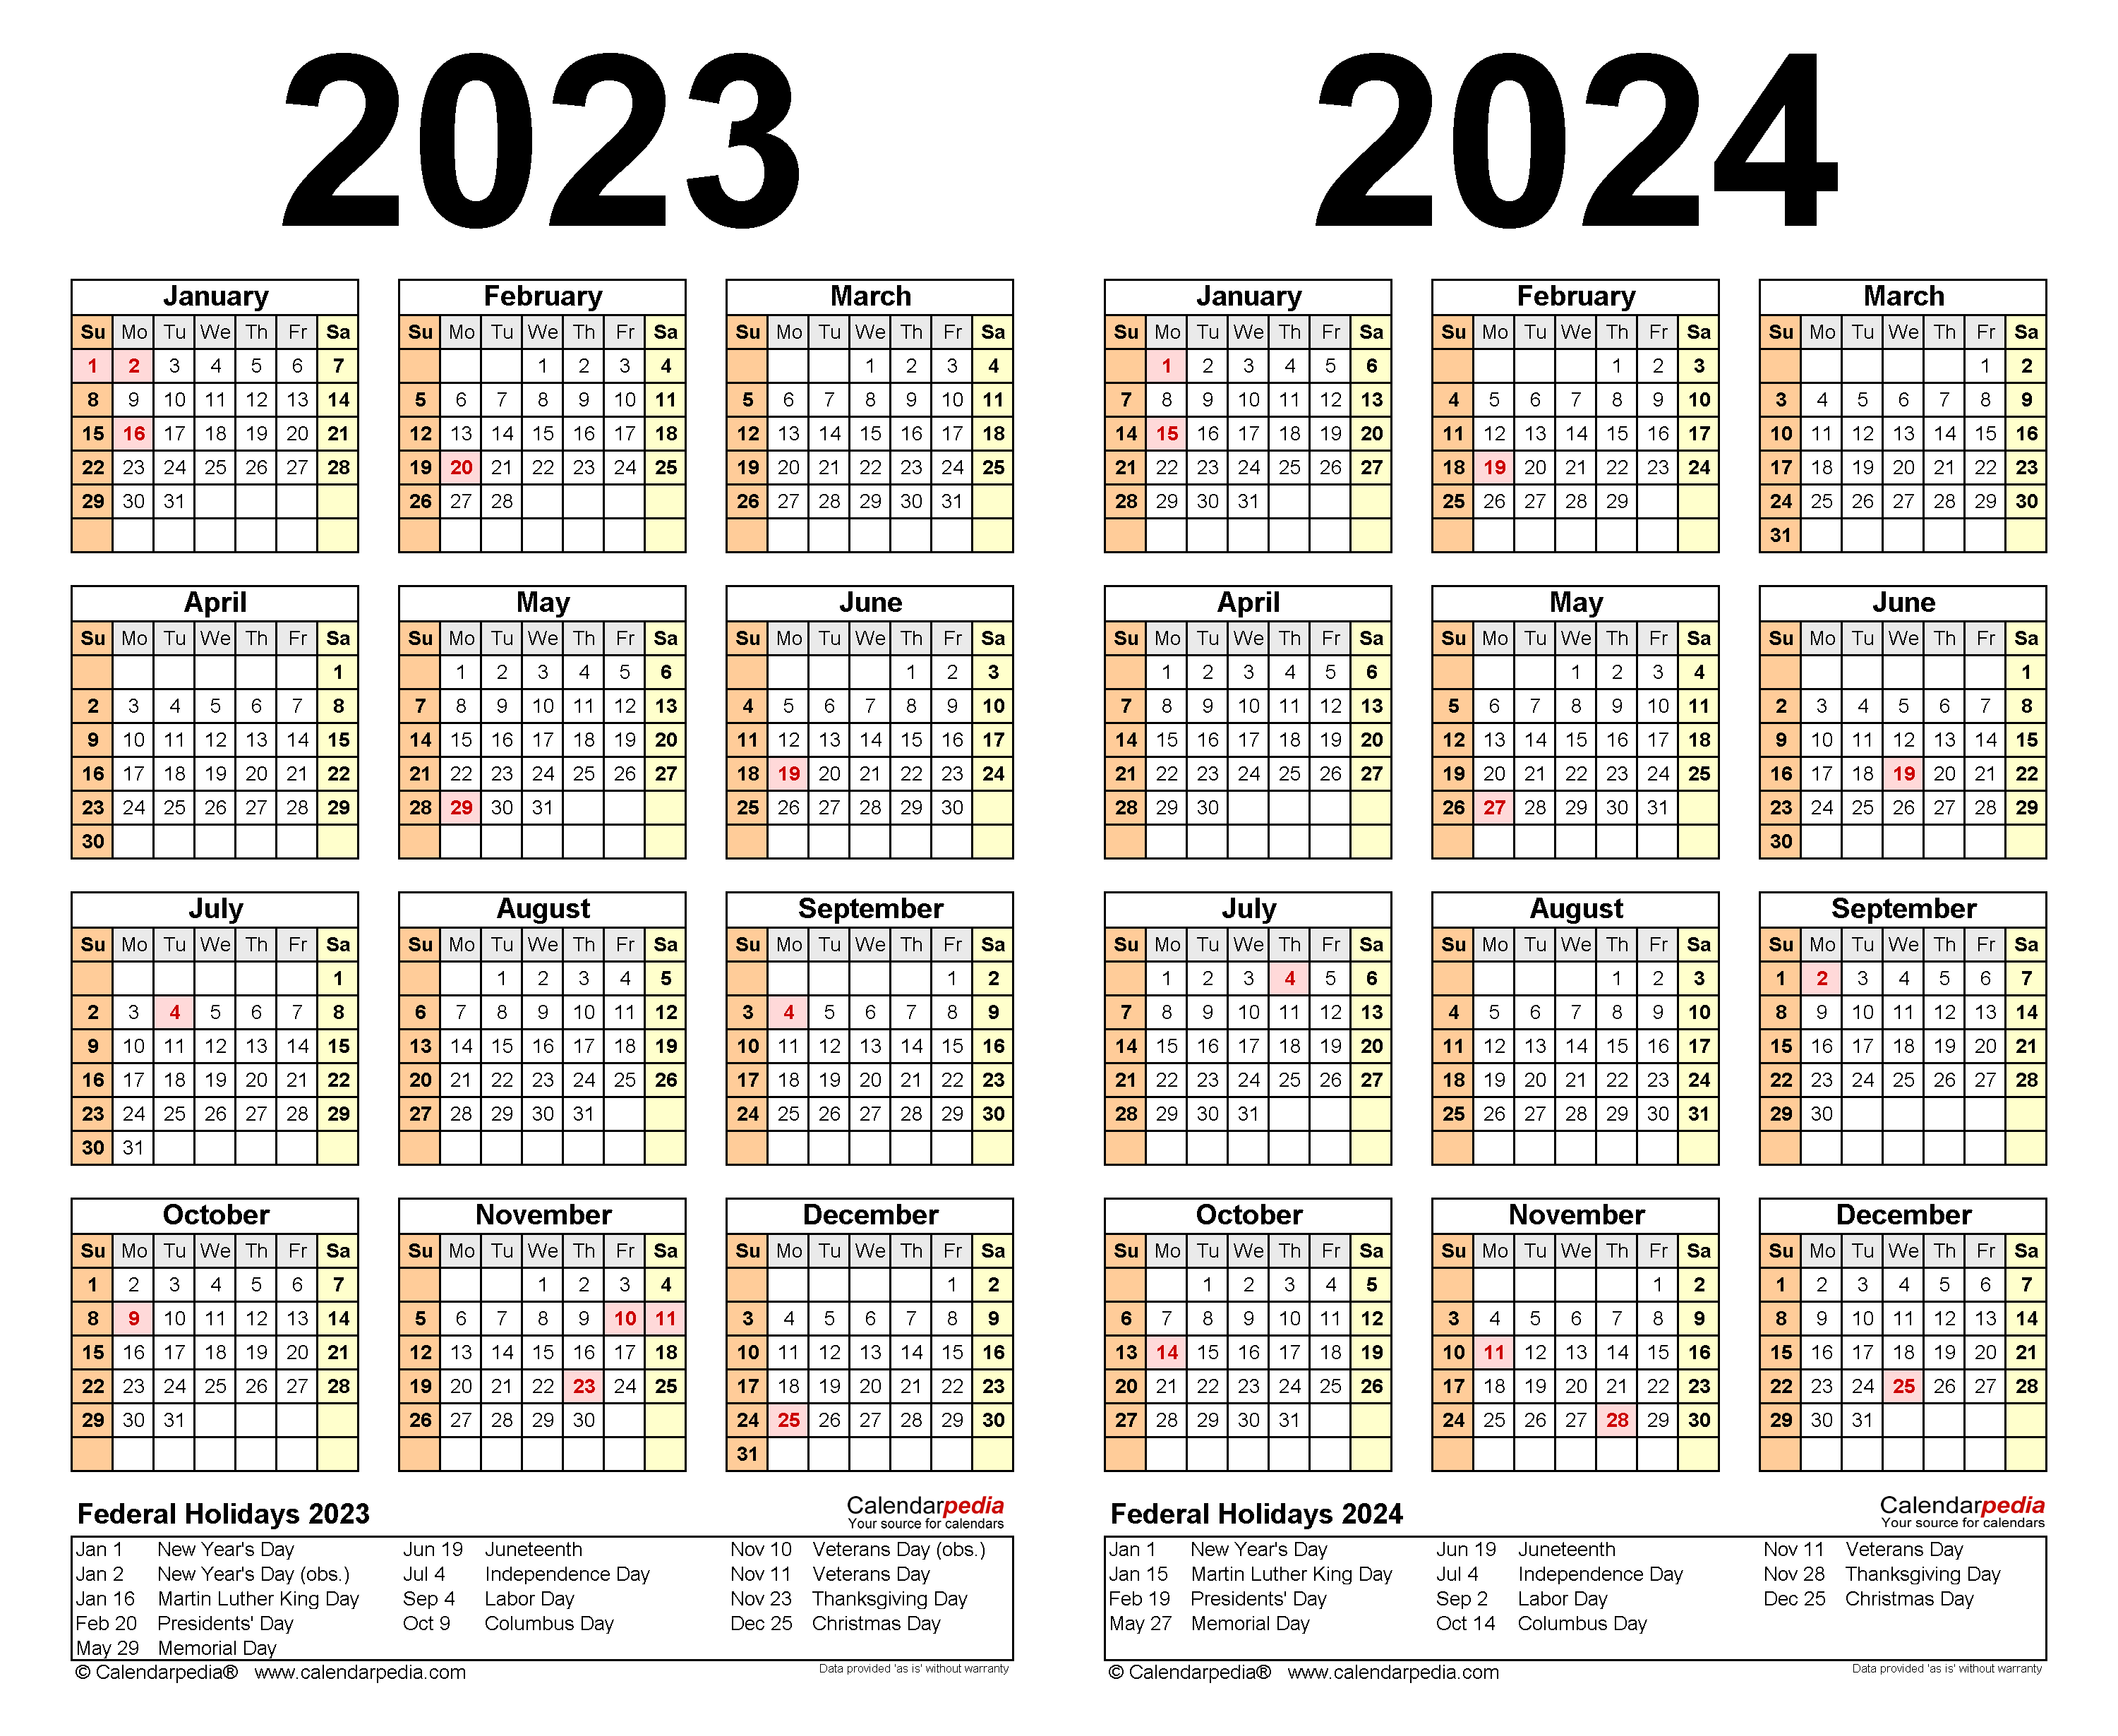 Uoft 2024 Calendar Rodie Wilona